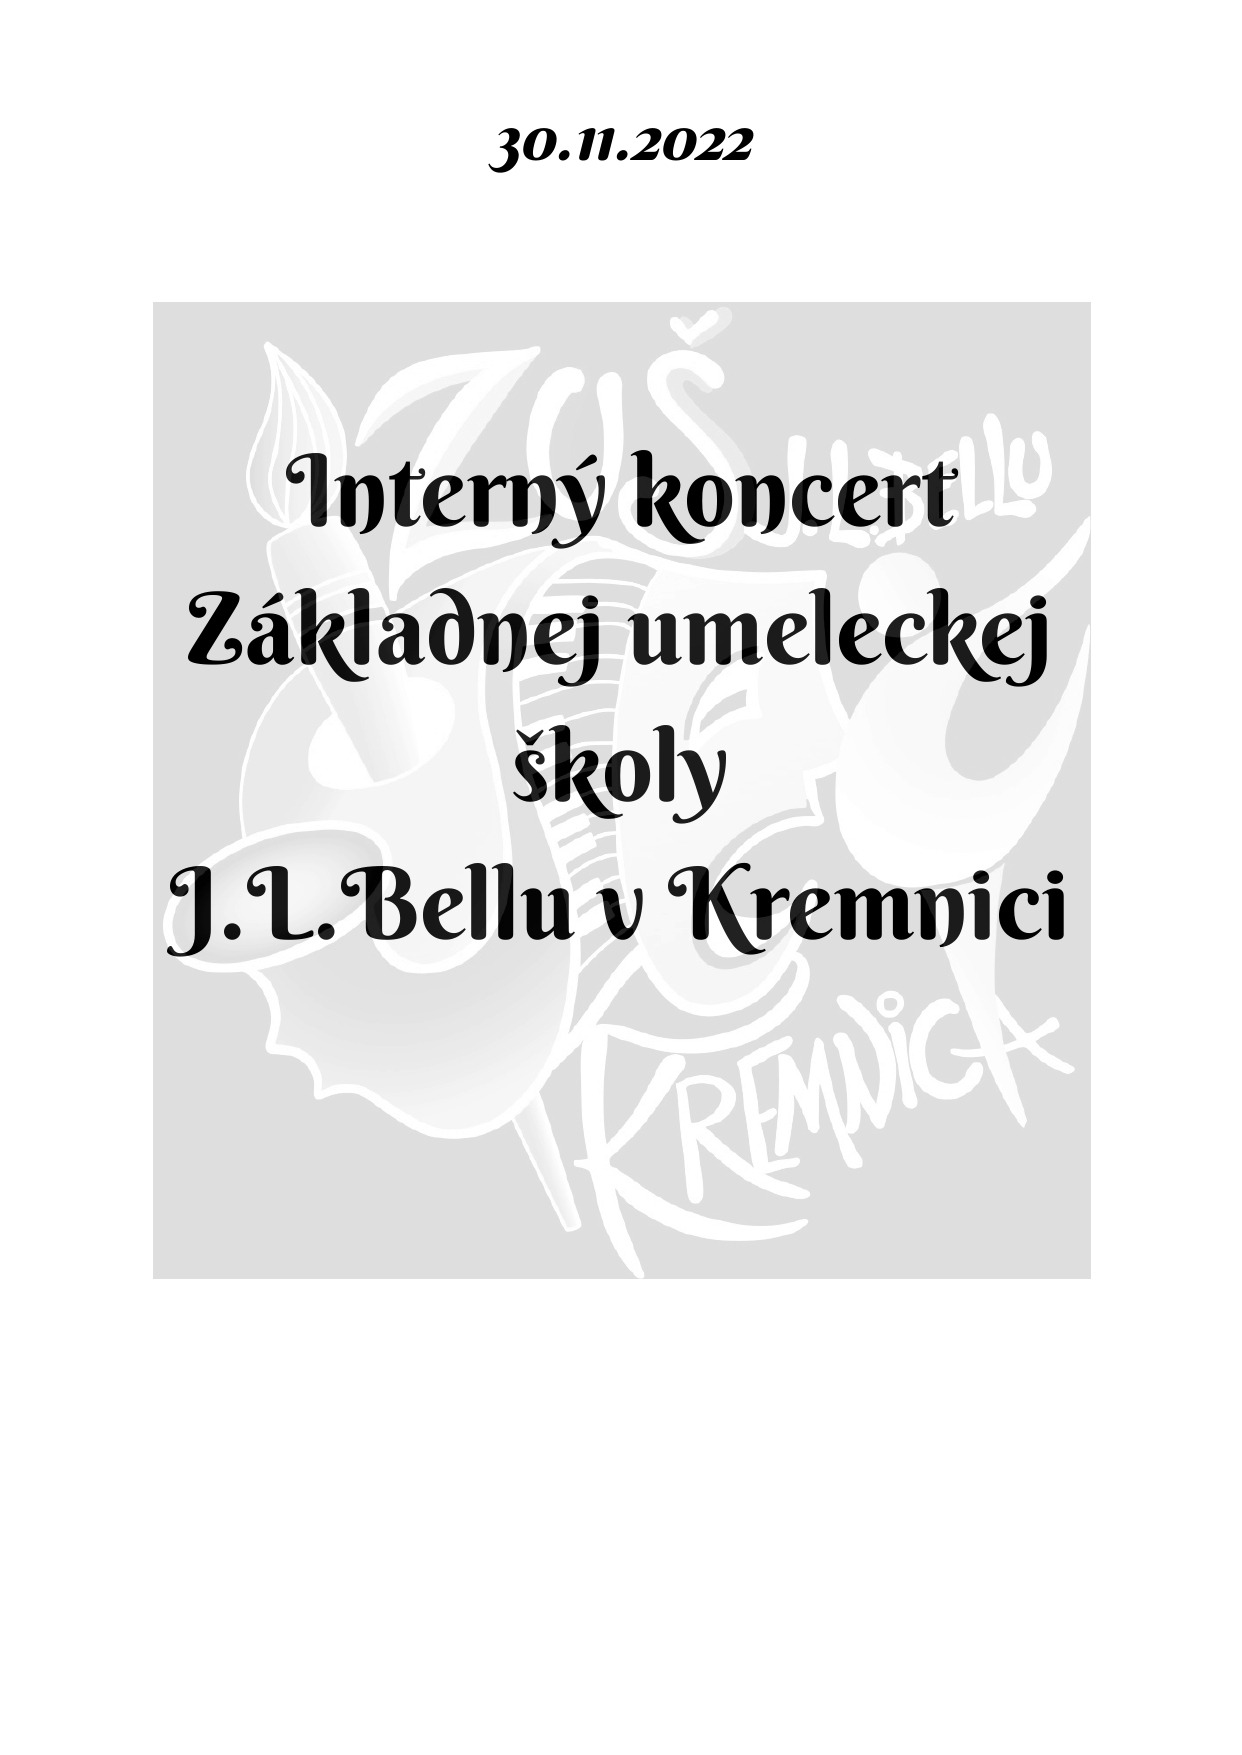 Pozvánka na online interný koncert dnes 30.11. o 17:00 - Obrázok 1